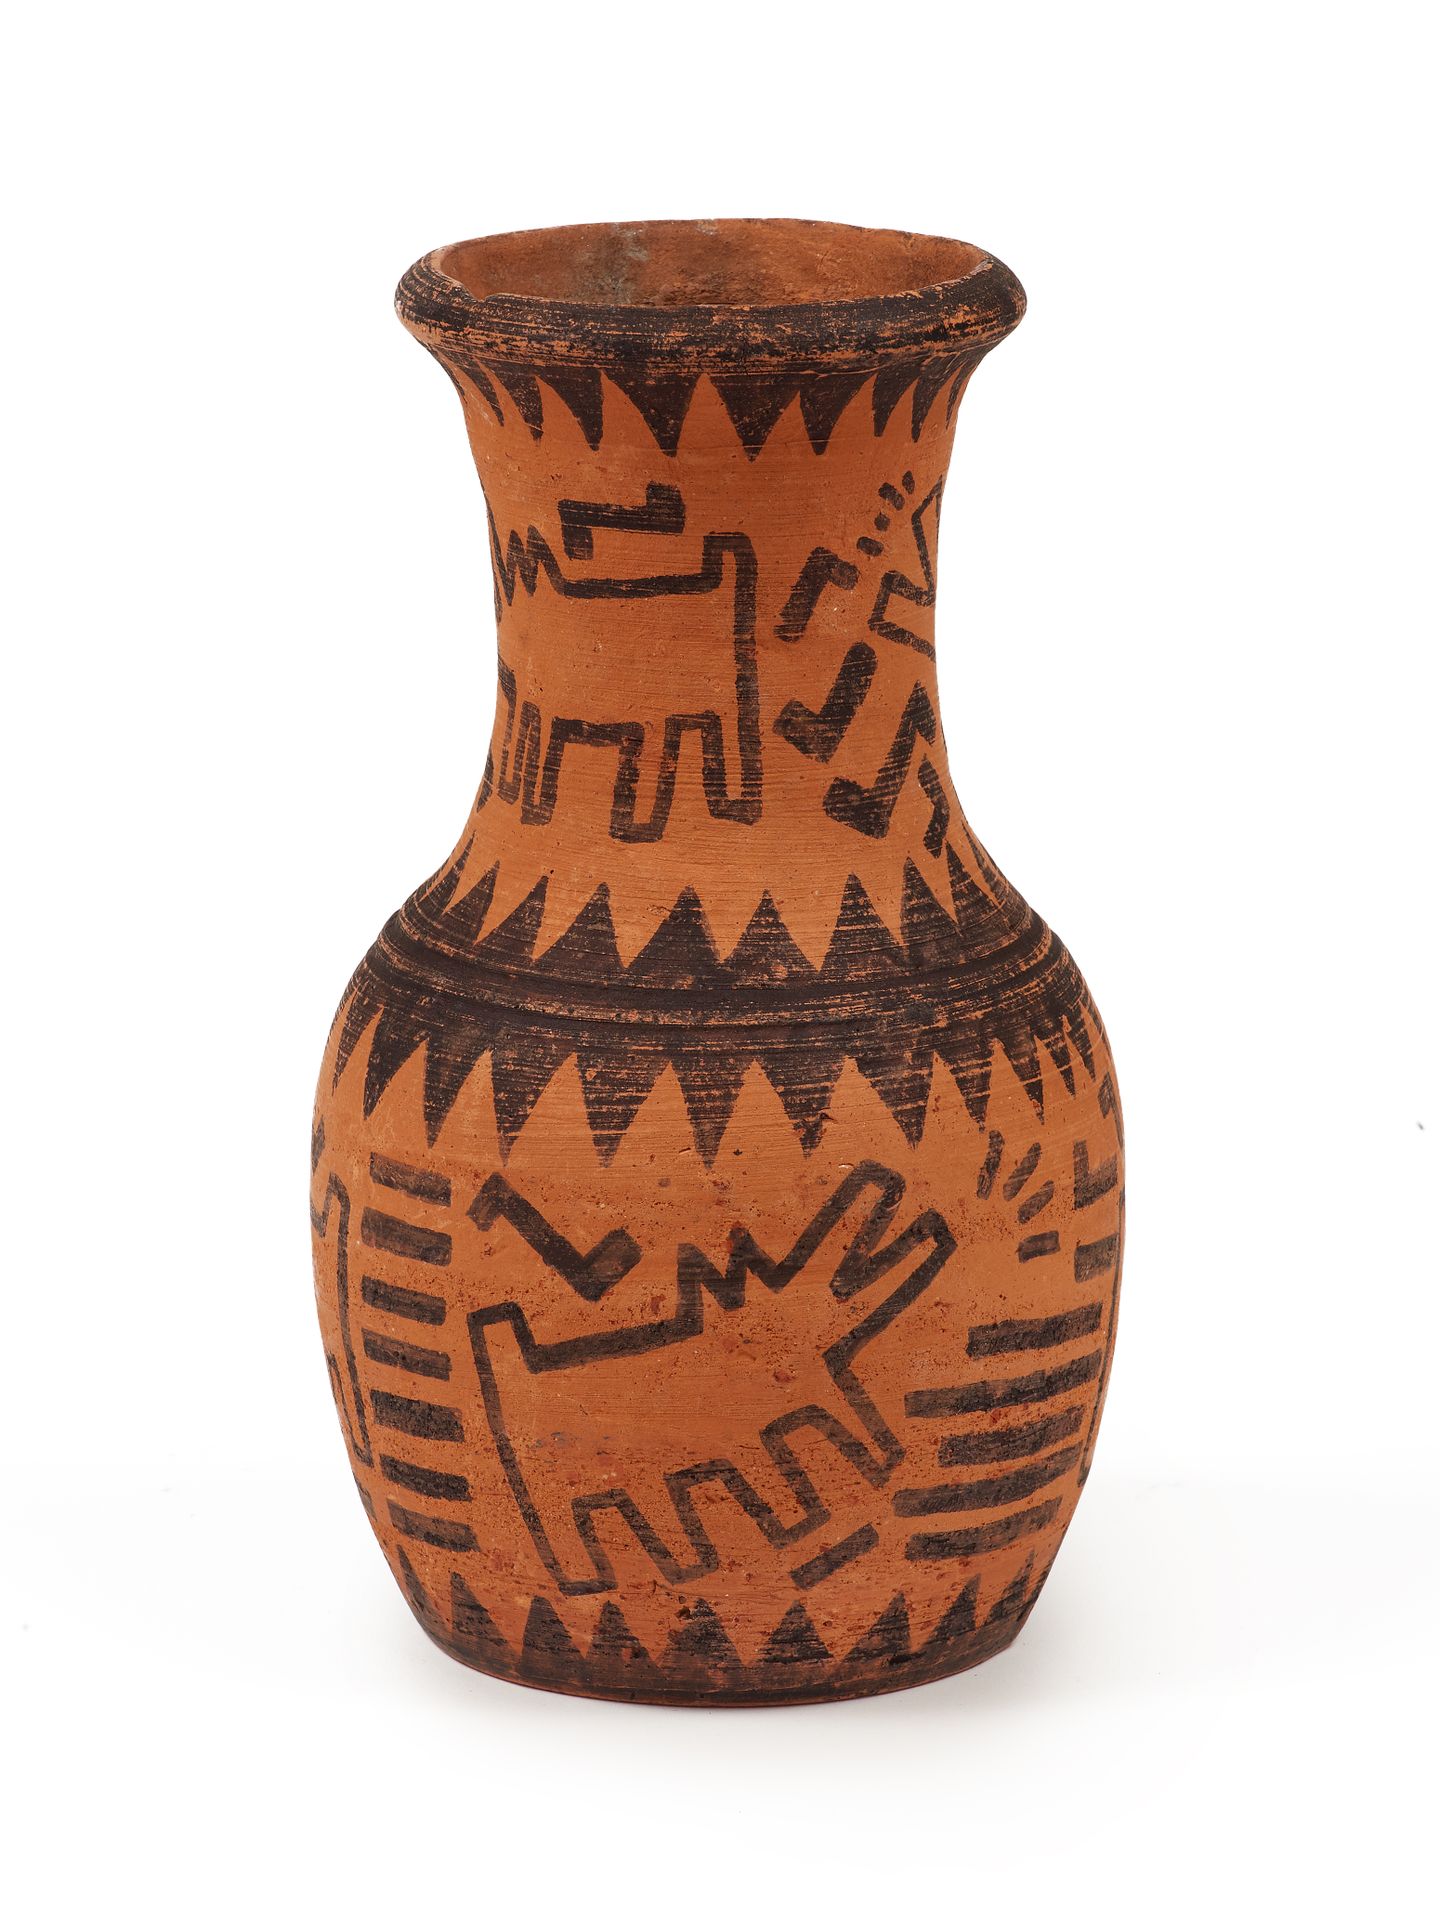 Null 基思-哈林（1958-1990） 
犬类, 1988
陶土花瓶上的水墨画，底座上有签名和日期
H.20厘米

该花瓶附有Keith Haring基金会&hellip;